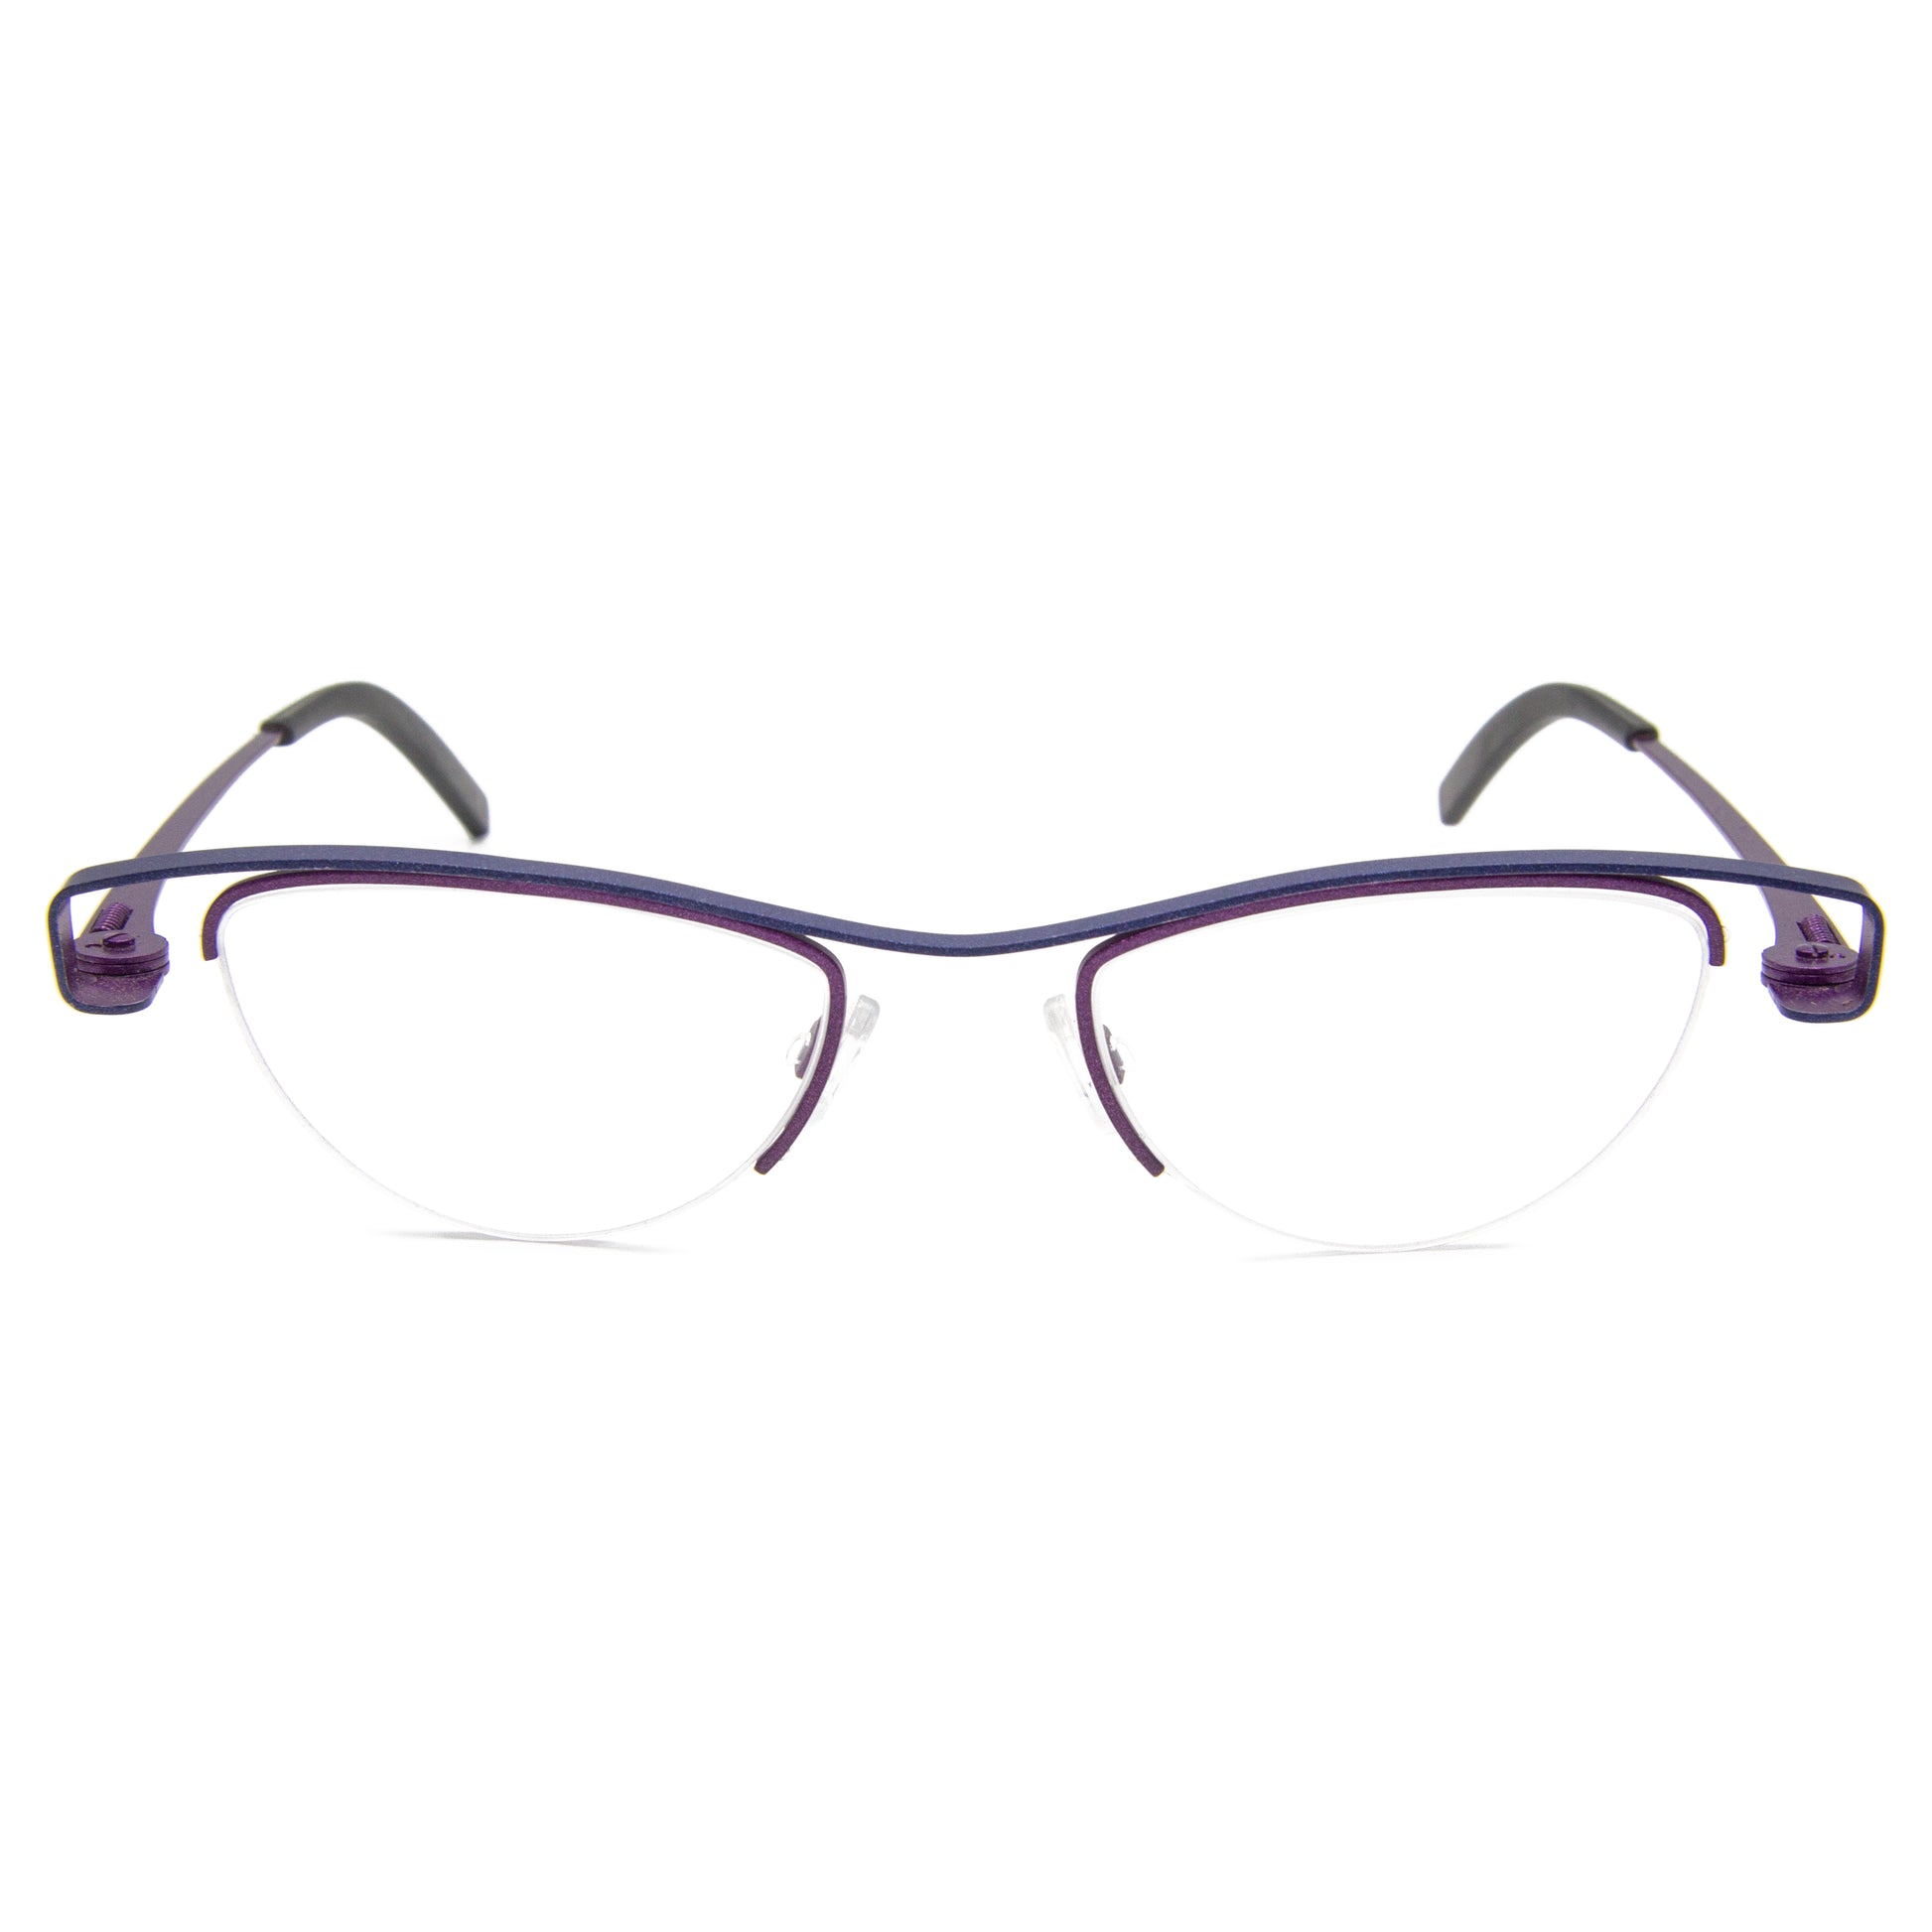 Theo - Eyewear - Knoedel - Glasses